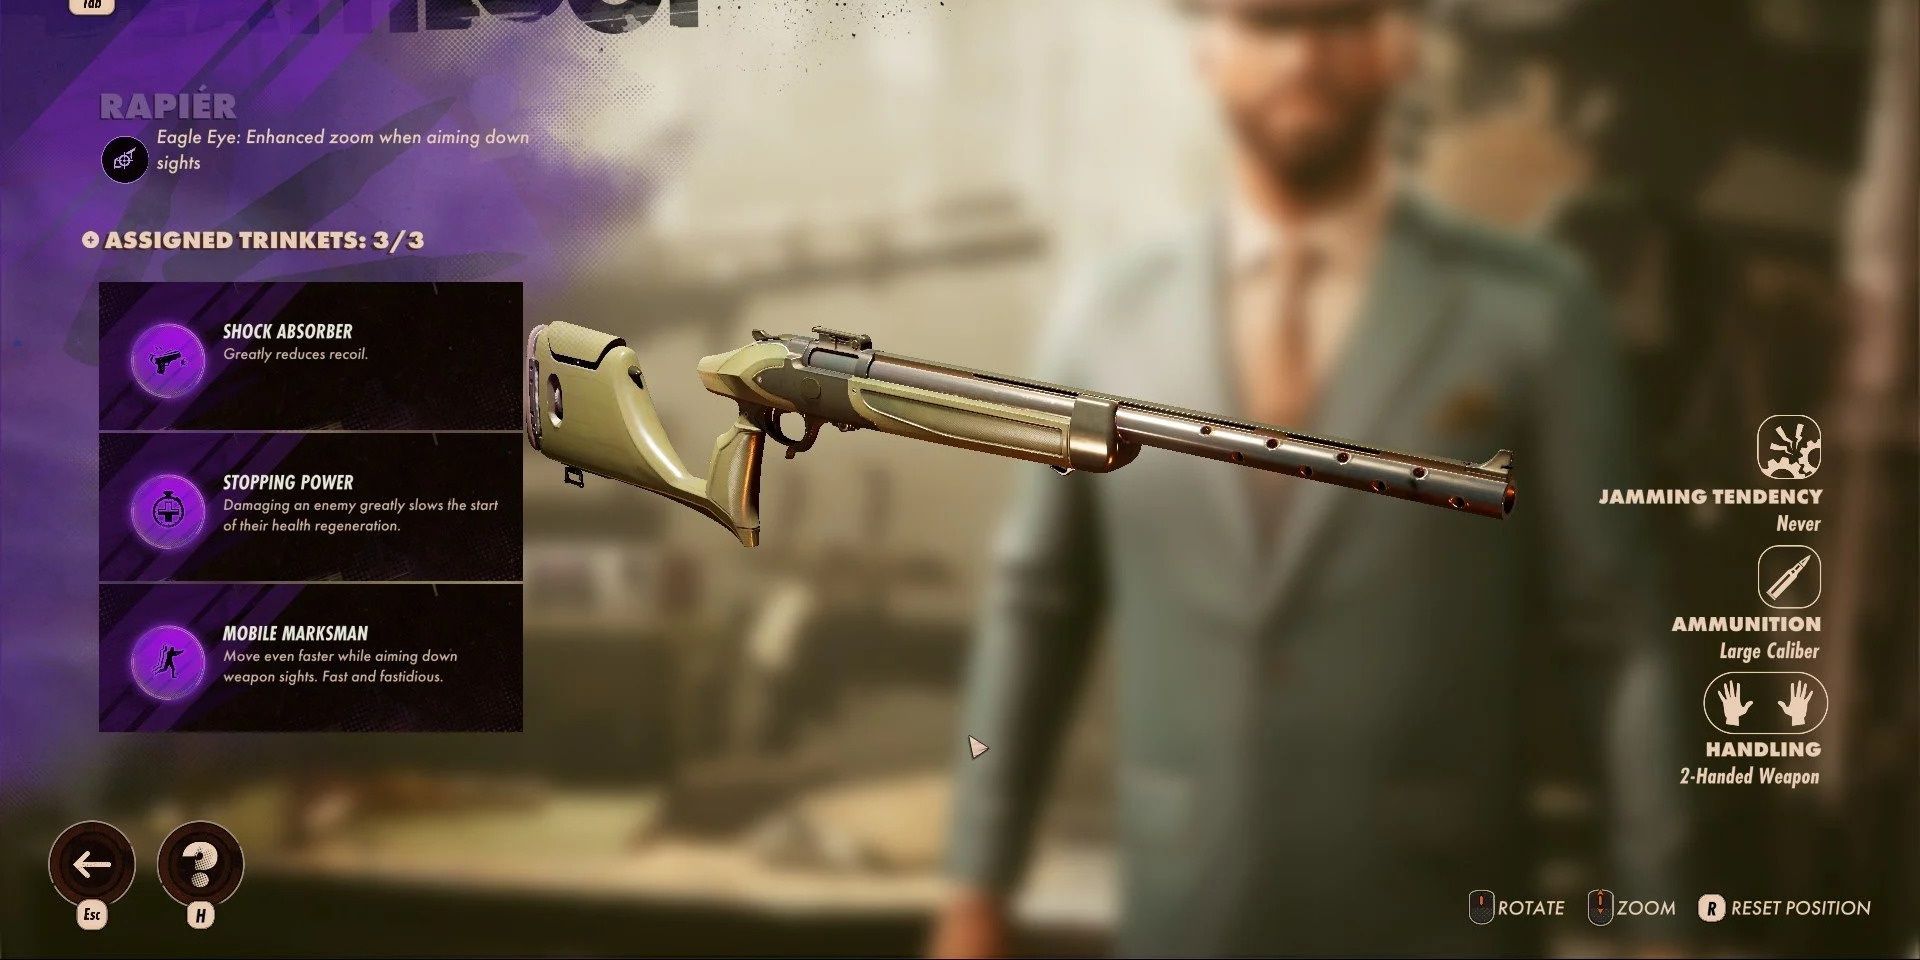 Screenshot of the Mobile Marksman trinket in Deathloop with a Rapier gun in center of the screen